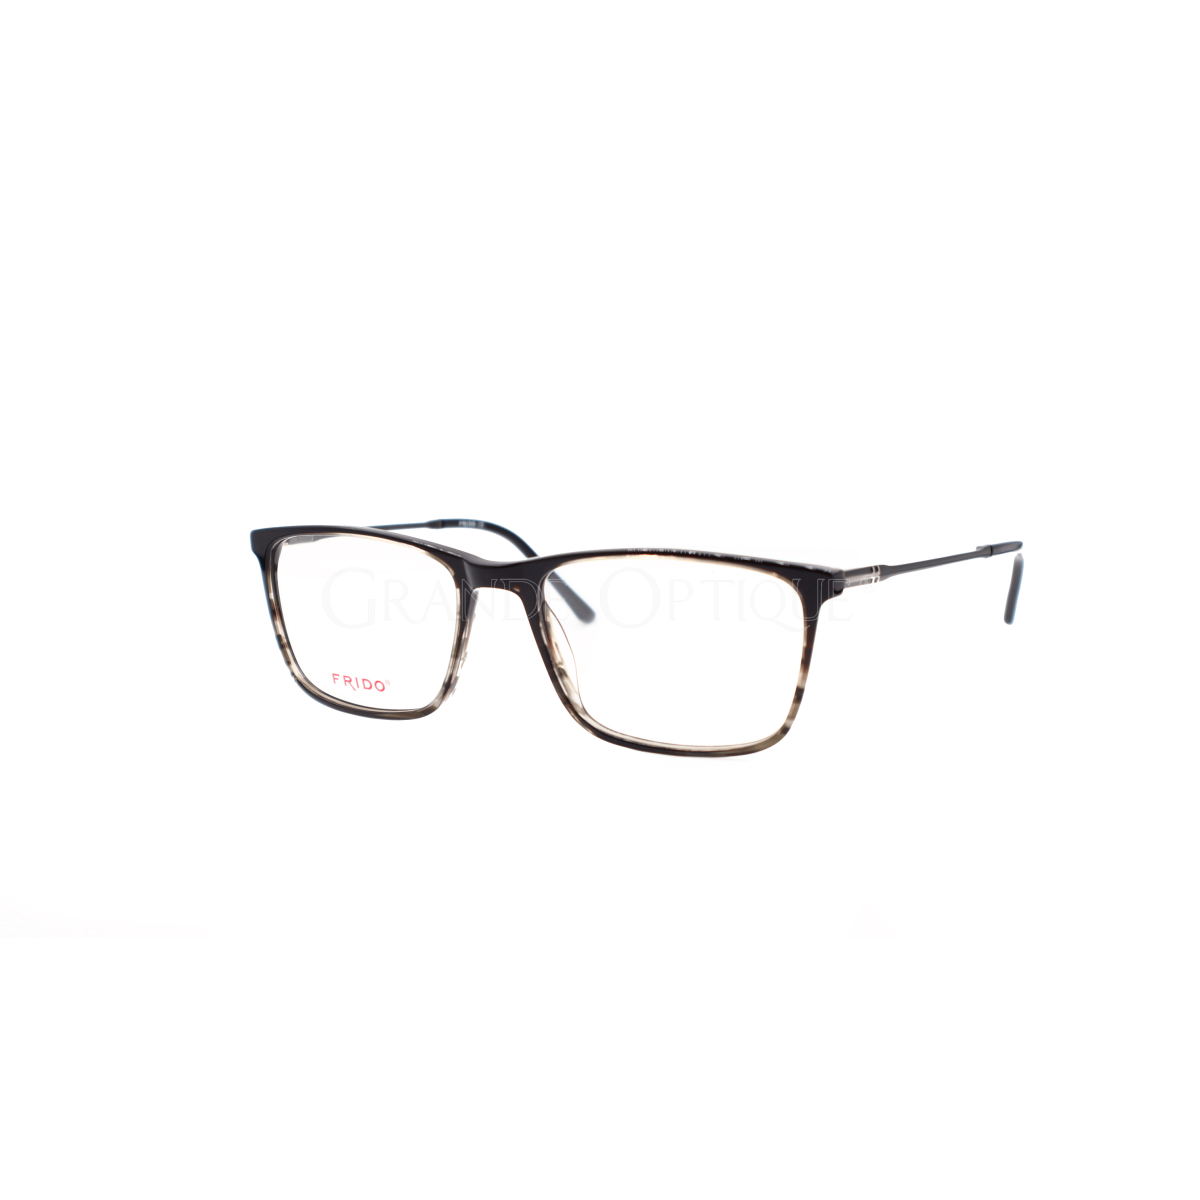 Rame de ochelari Frido 11263 01